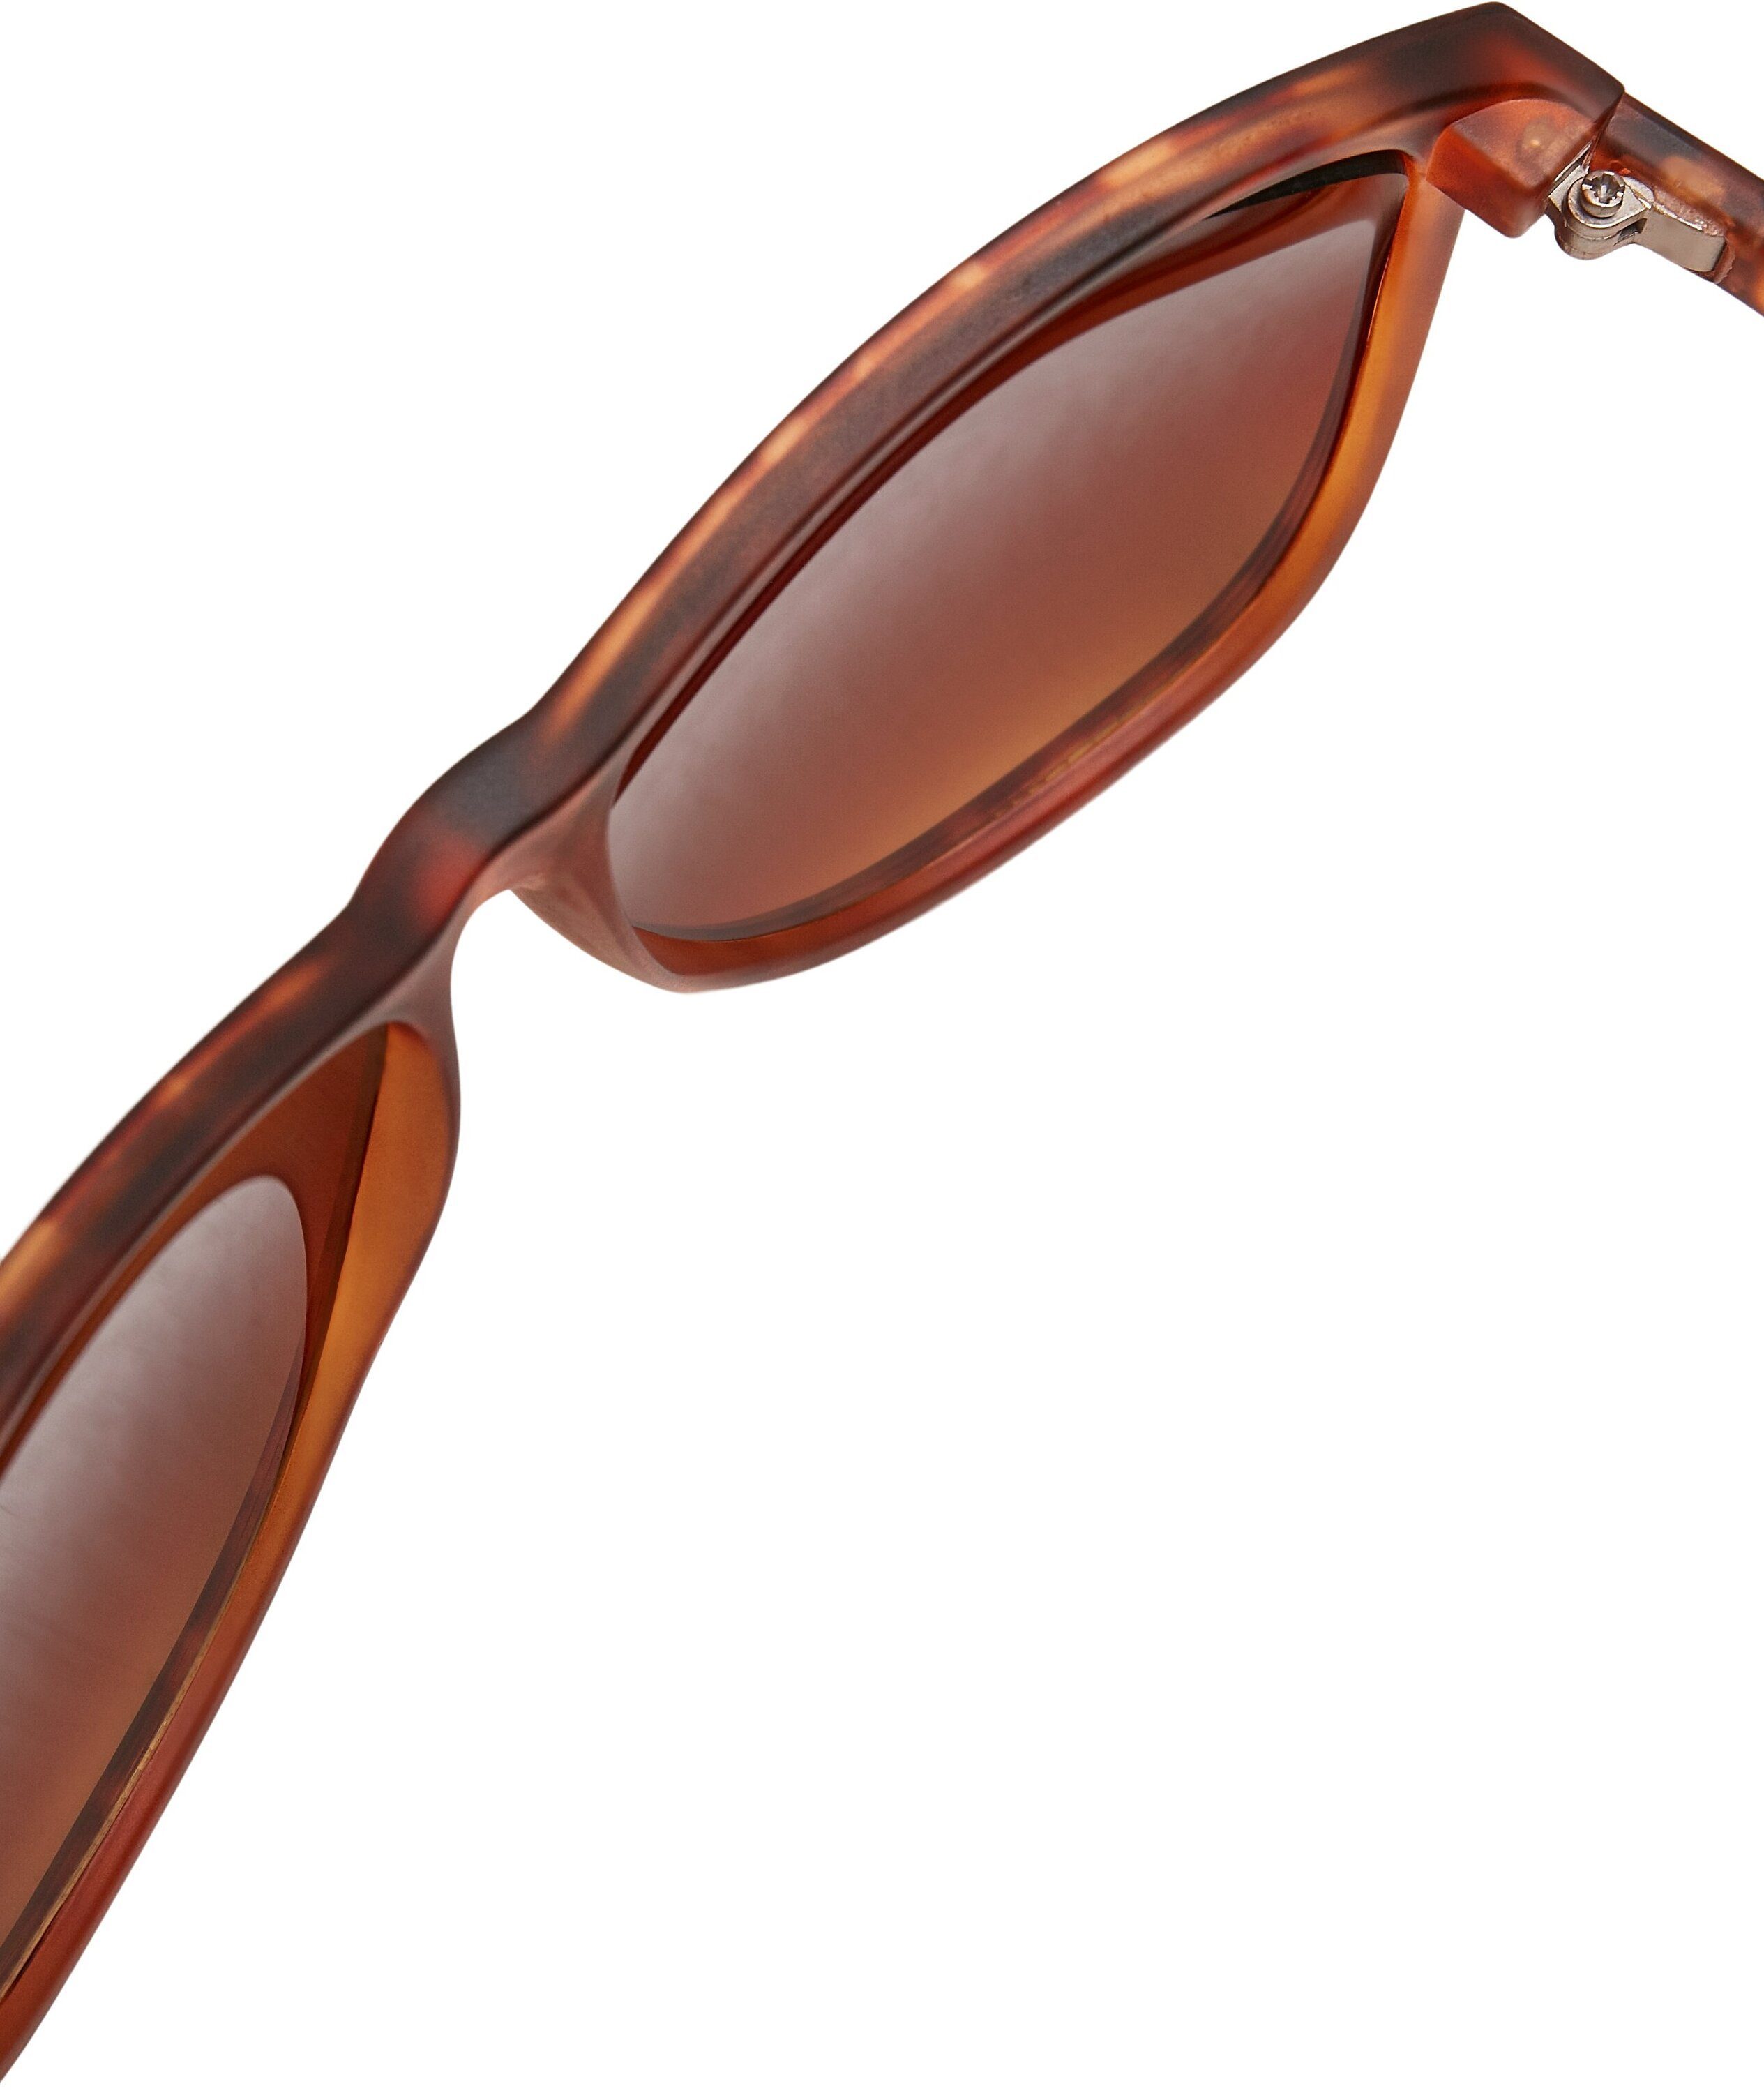 URBAN CLASSICS Sonnenbrille Accessoires Sunglasses brown UC leo Chirwa